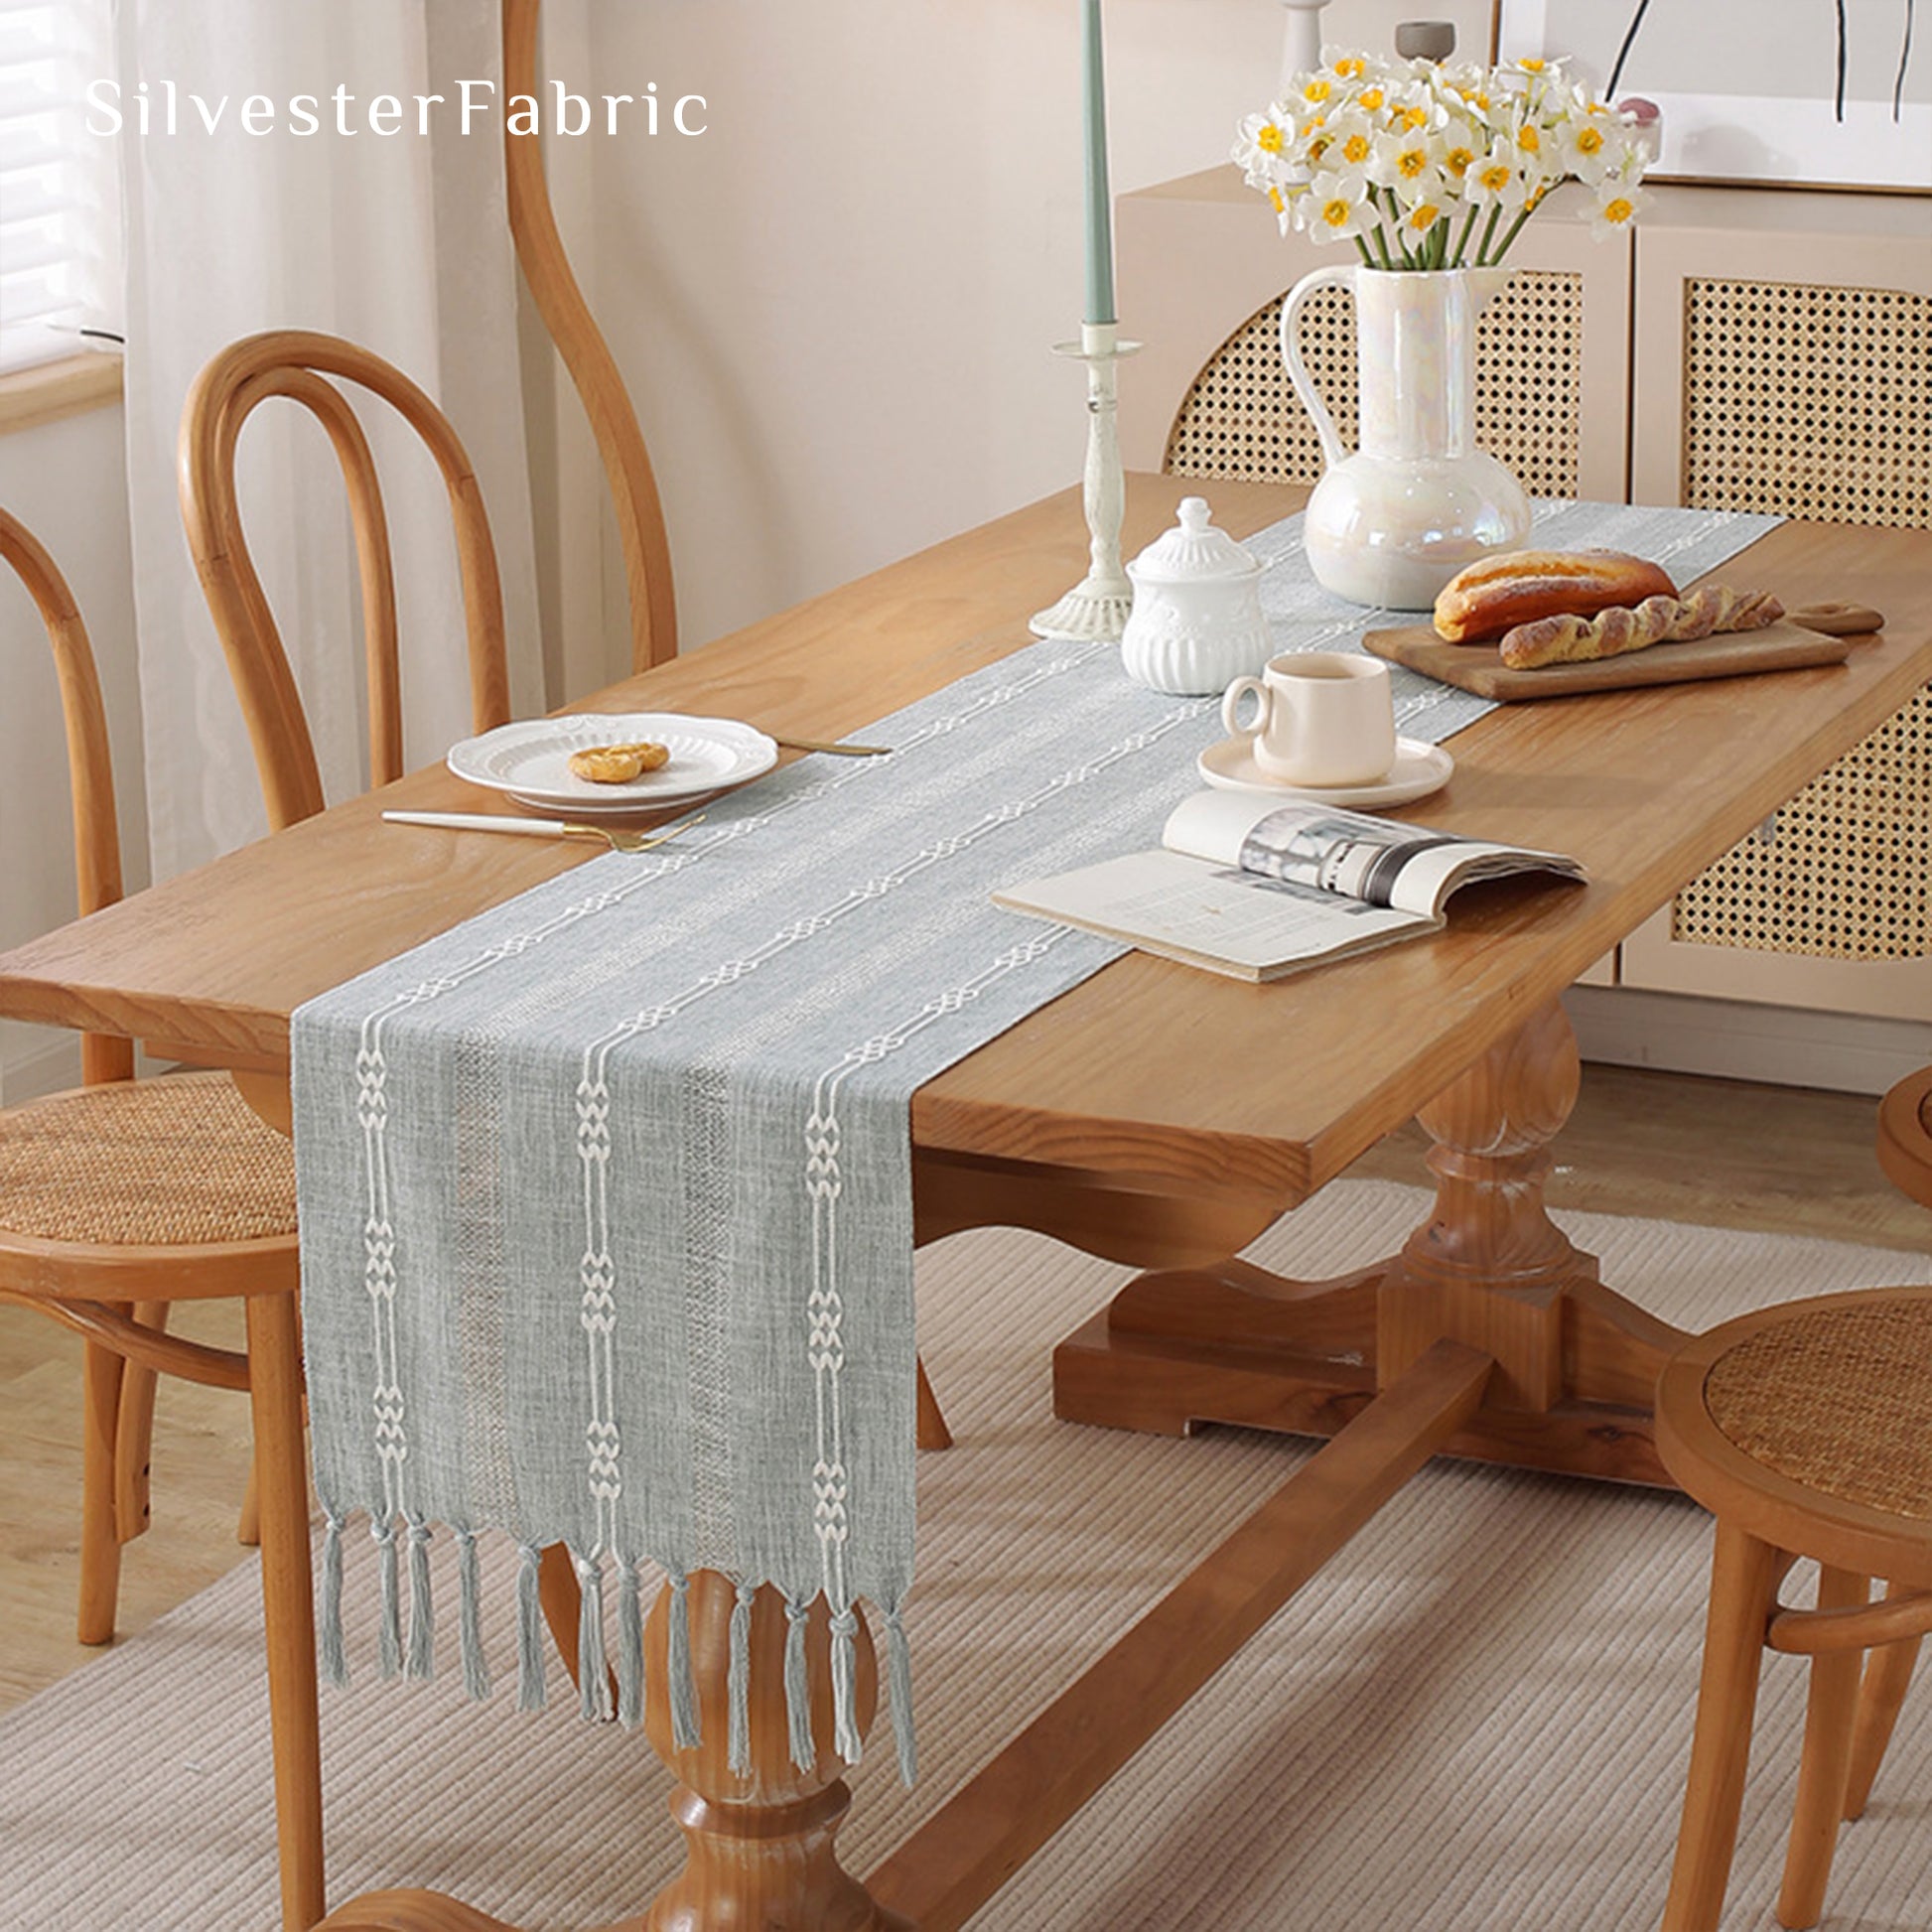 Table Runner丨Coffee Table Runner - Silvester Fabric